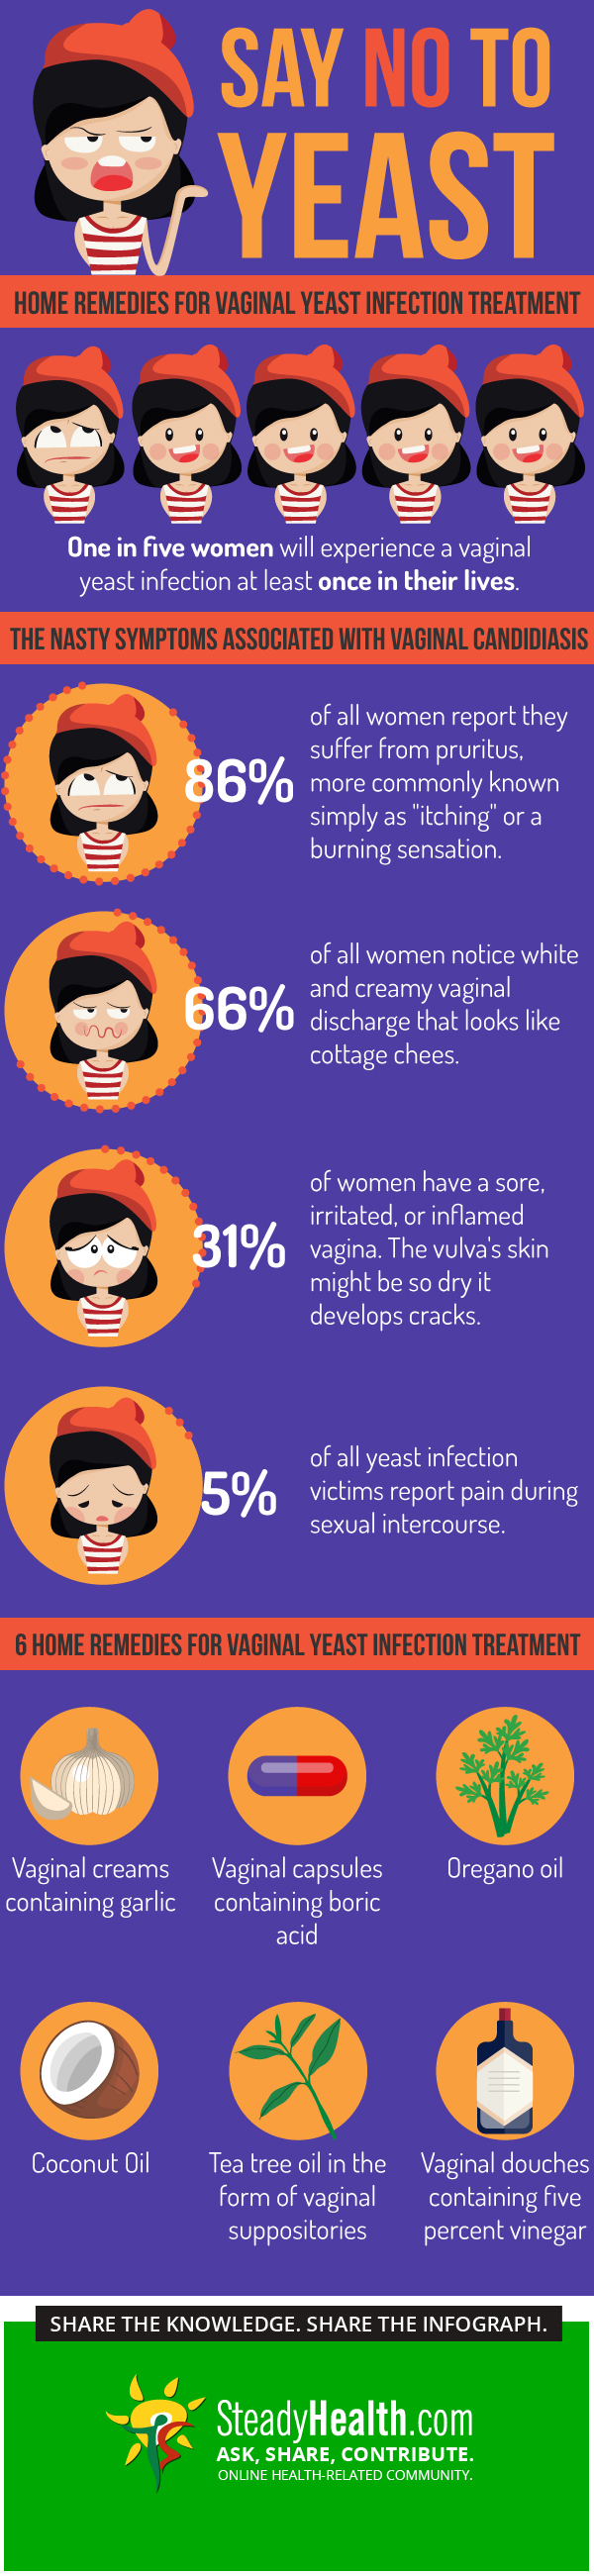 yeast infection symptoms in women